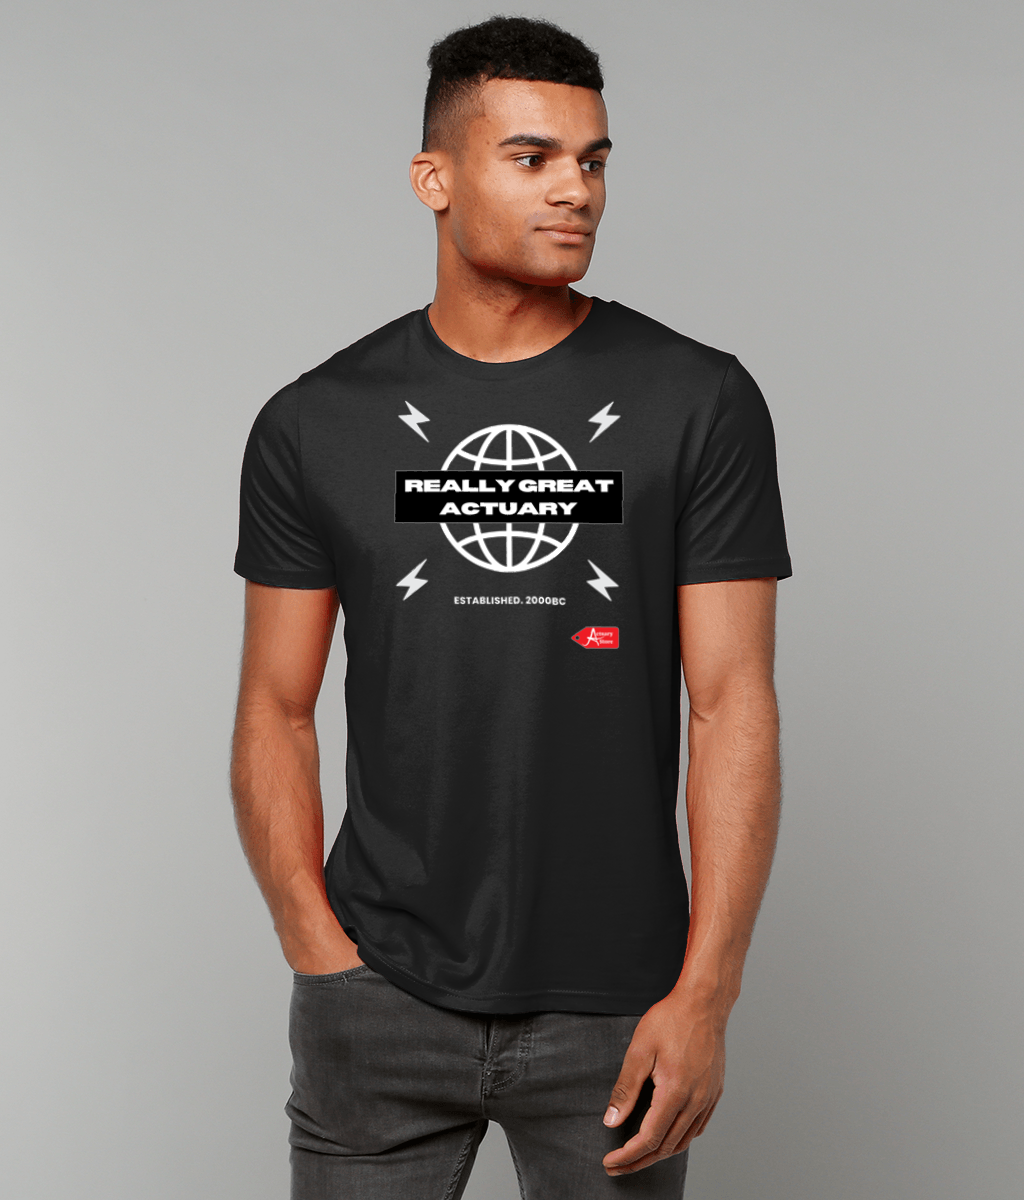 Really Great Actuary Black Streetwear Globe Black T-Shirt